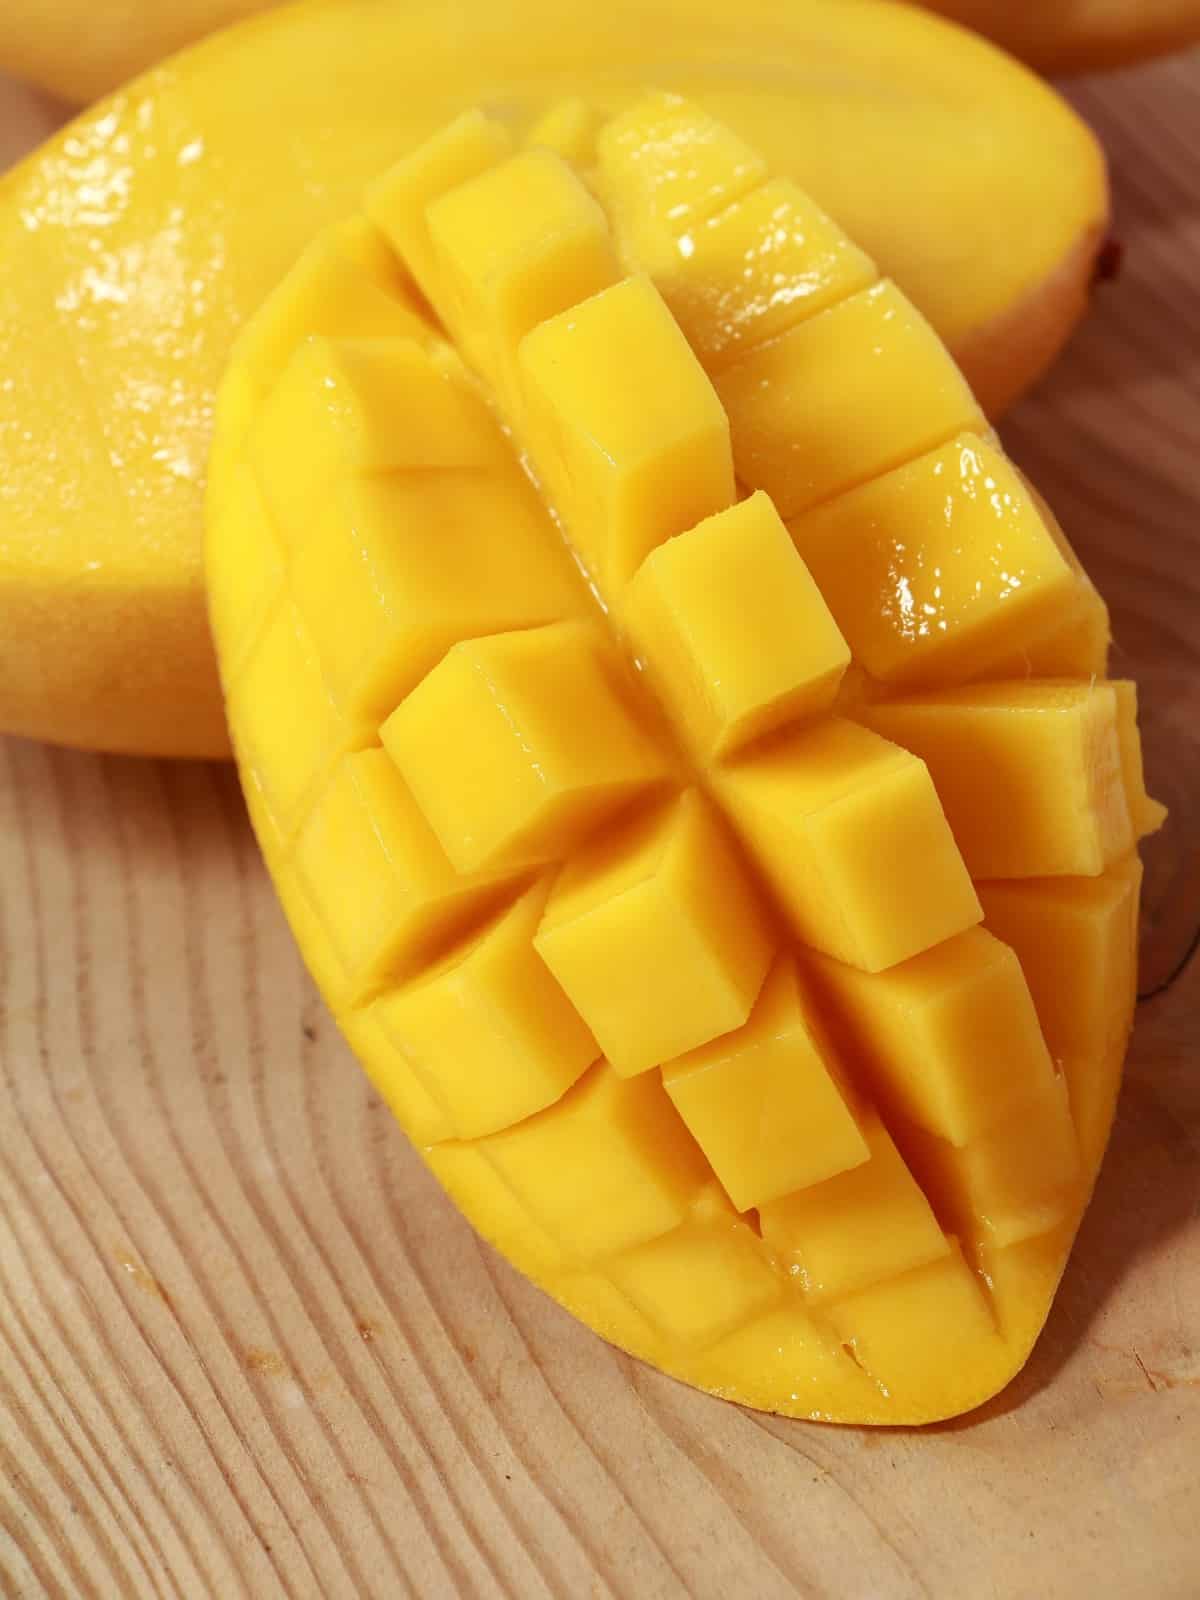 a sliced mango